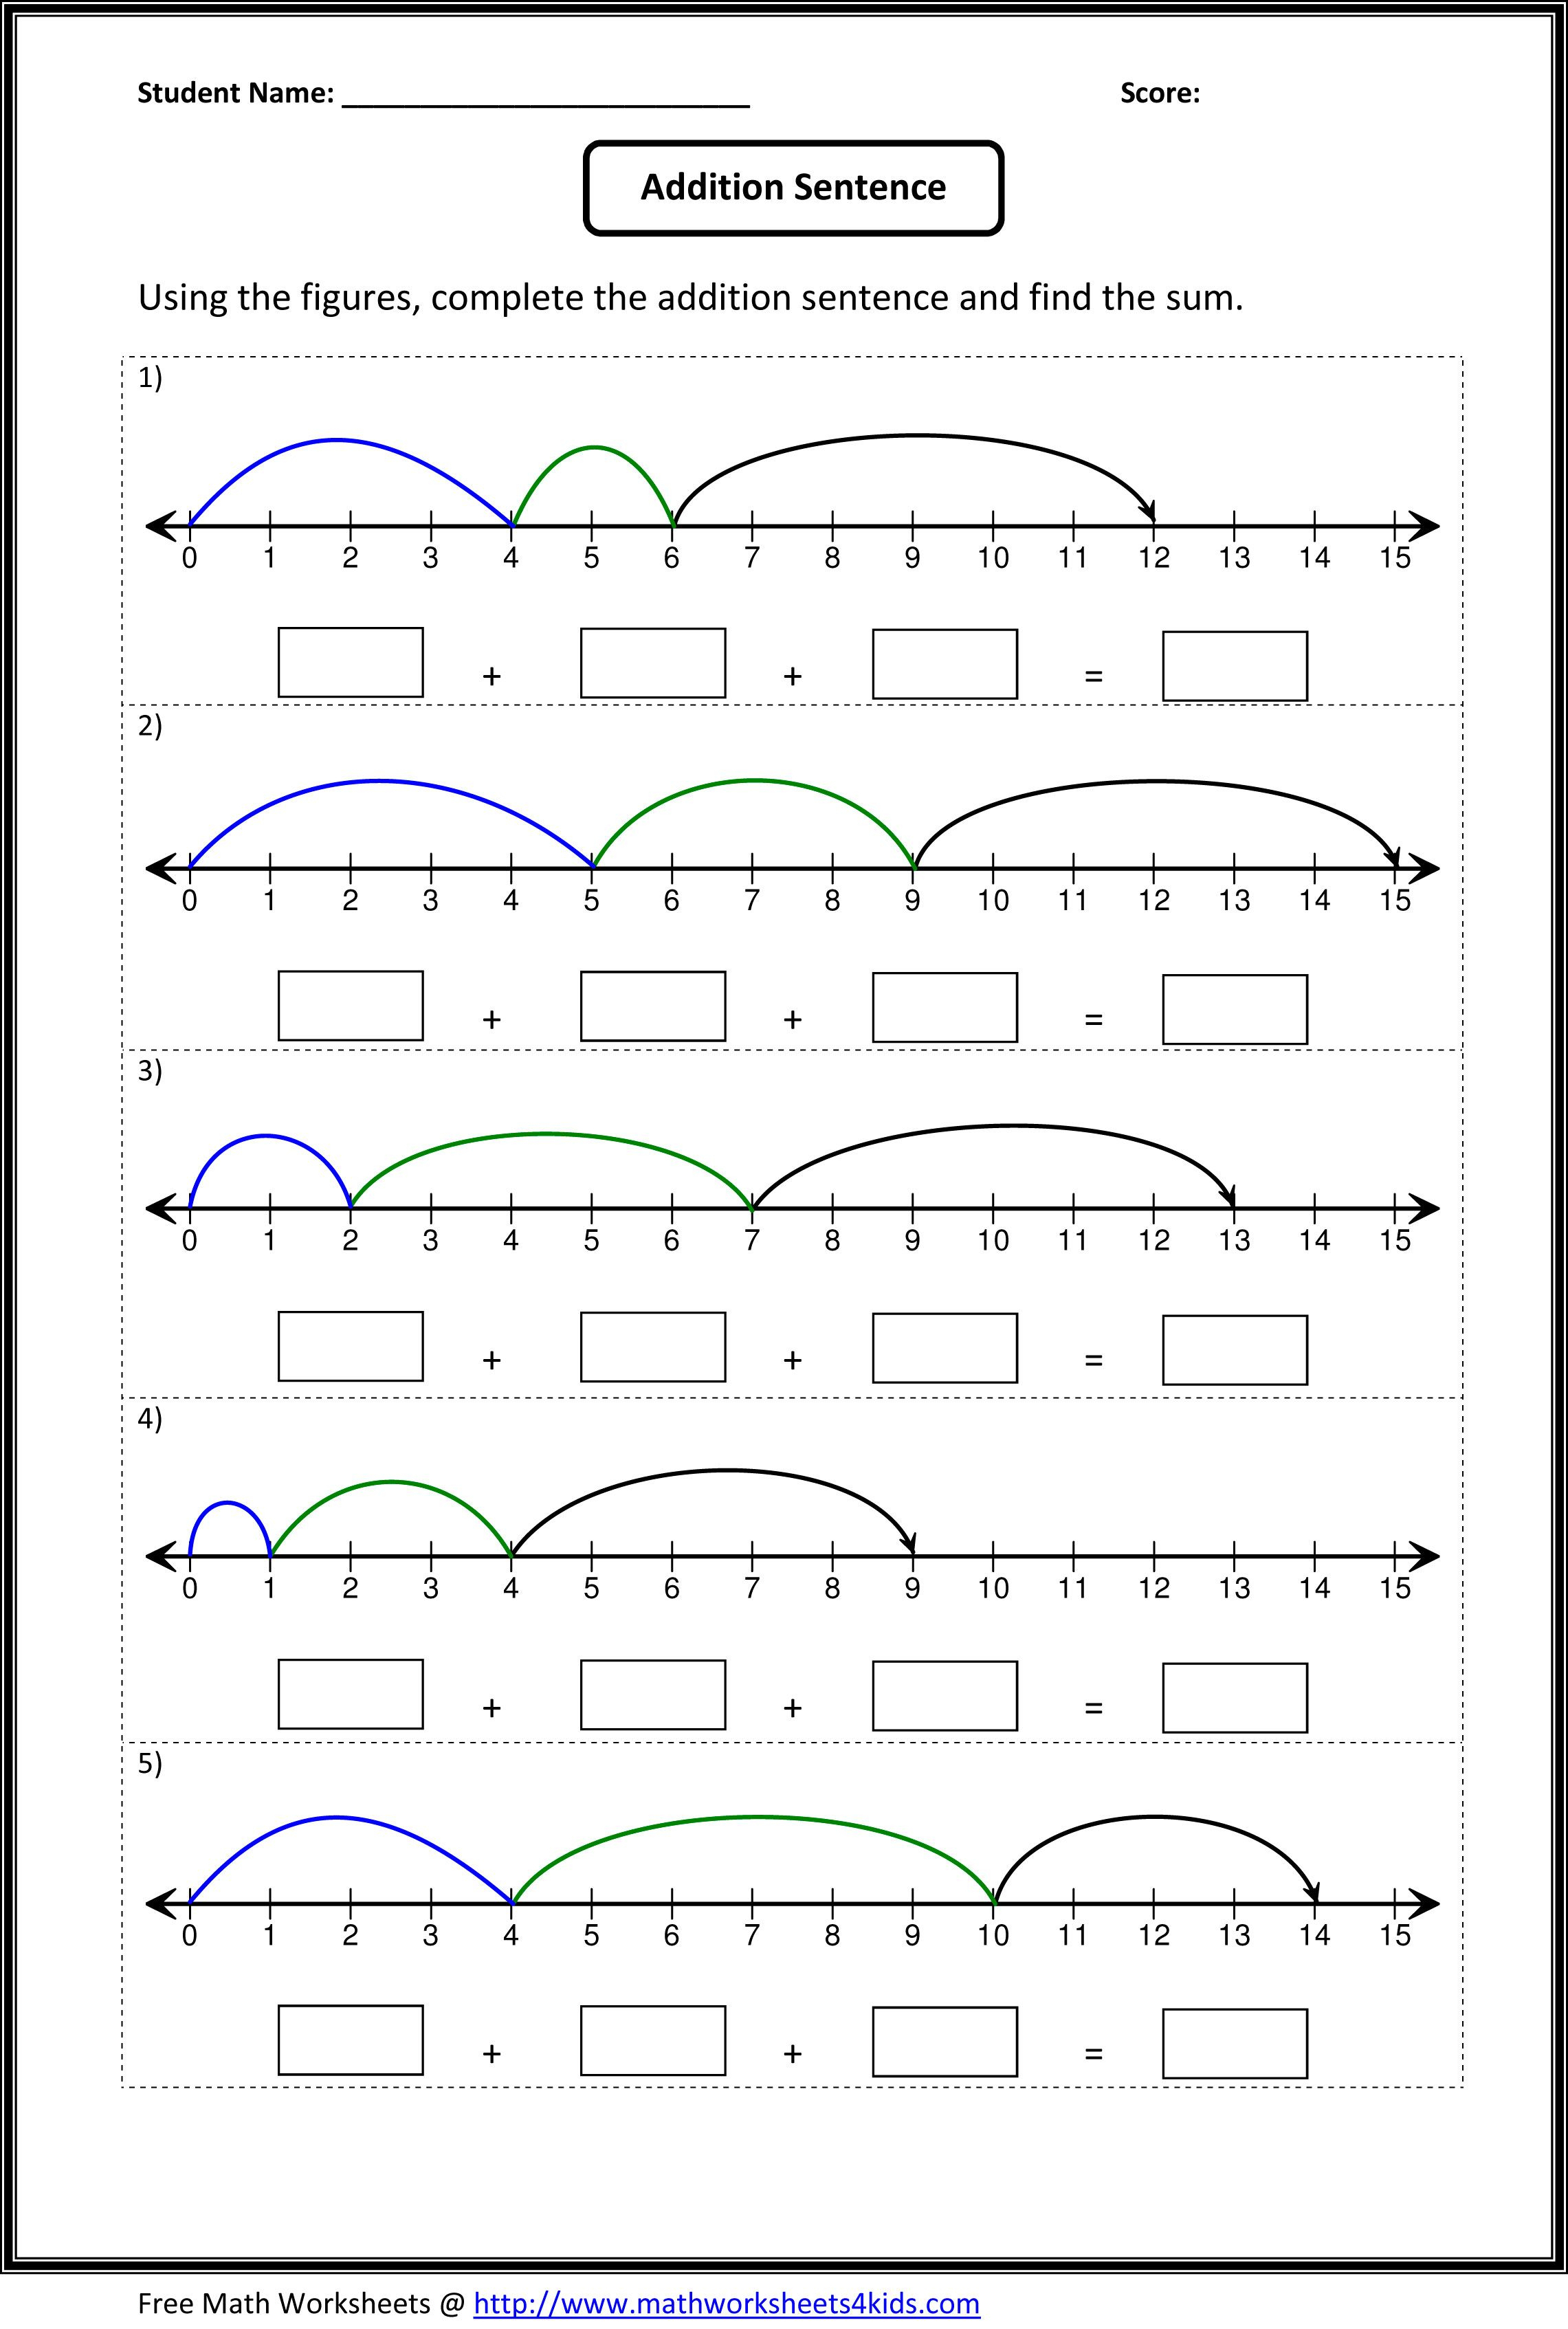 Worksheet : Phonics Workbook Math Games For 3Rd Graders Free | Free Printable Number Line Worksheets